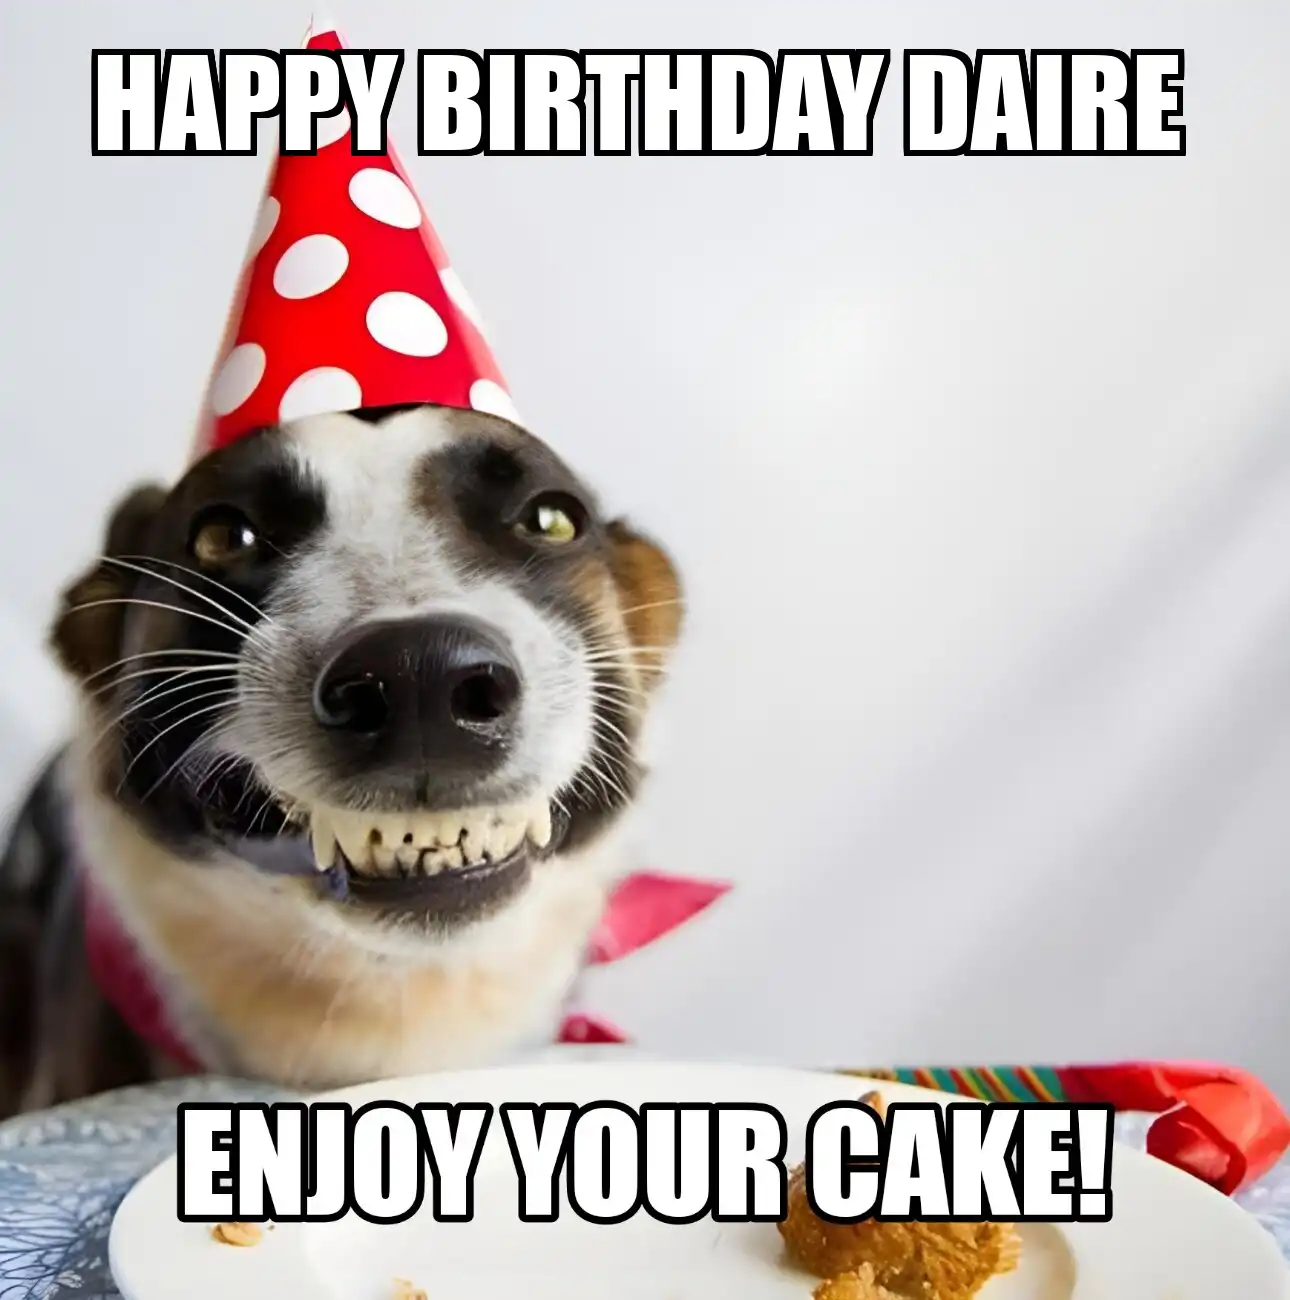 Happy Birthday Daire Enjoy Your Cake Dog Meme